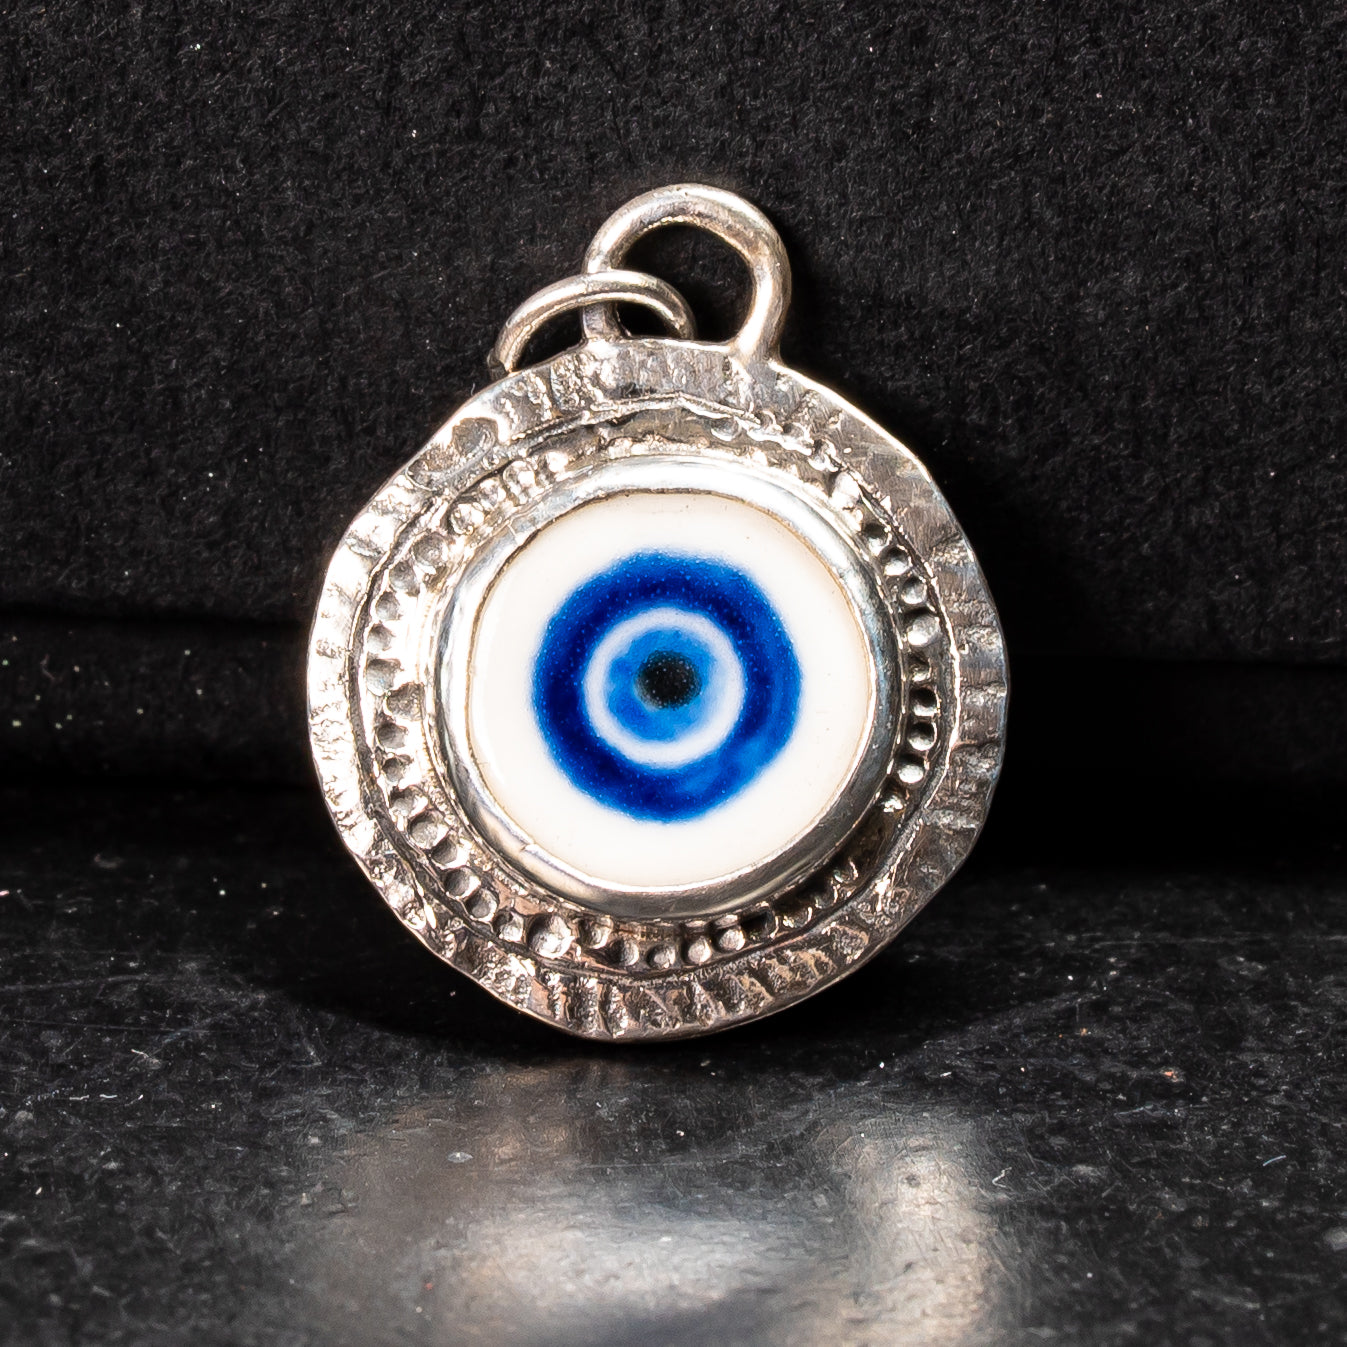 porcelain handprinted evil eye motif set in a sterling silver handmade coin pendant on a black background